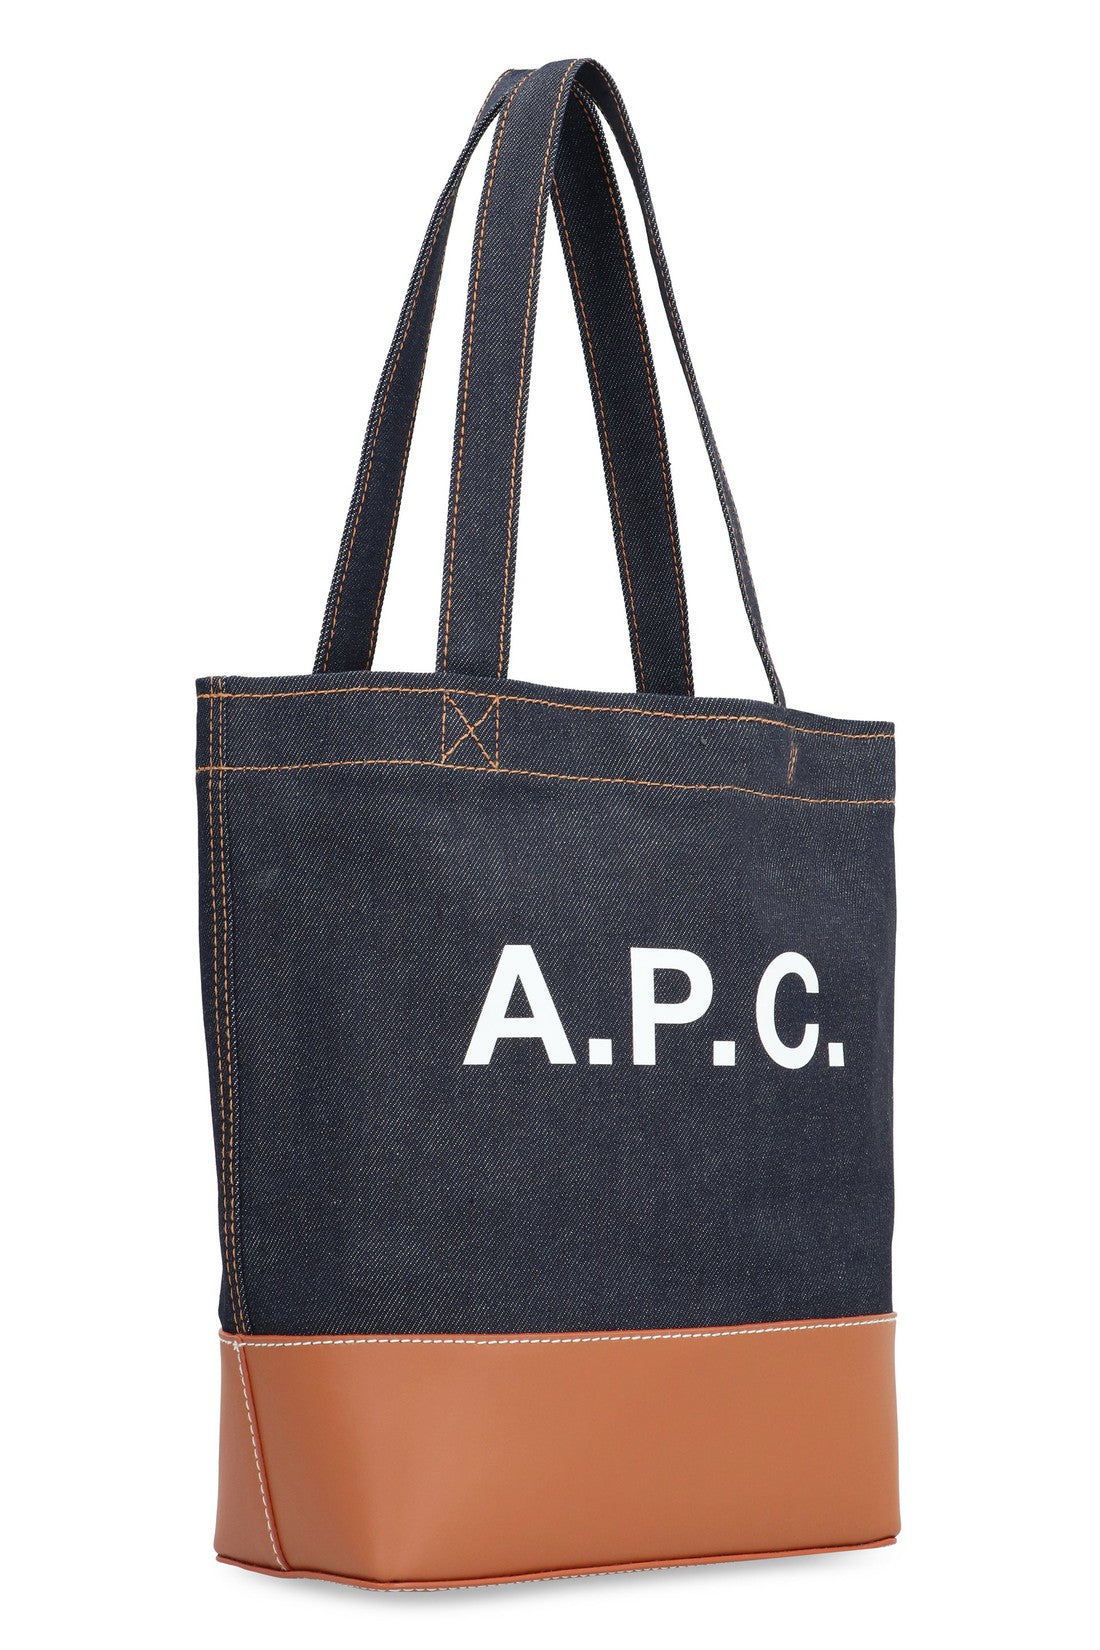 A.P.C.-OUTLET-SALE-Axel small denim tote bag-ARCHIVIST